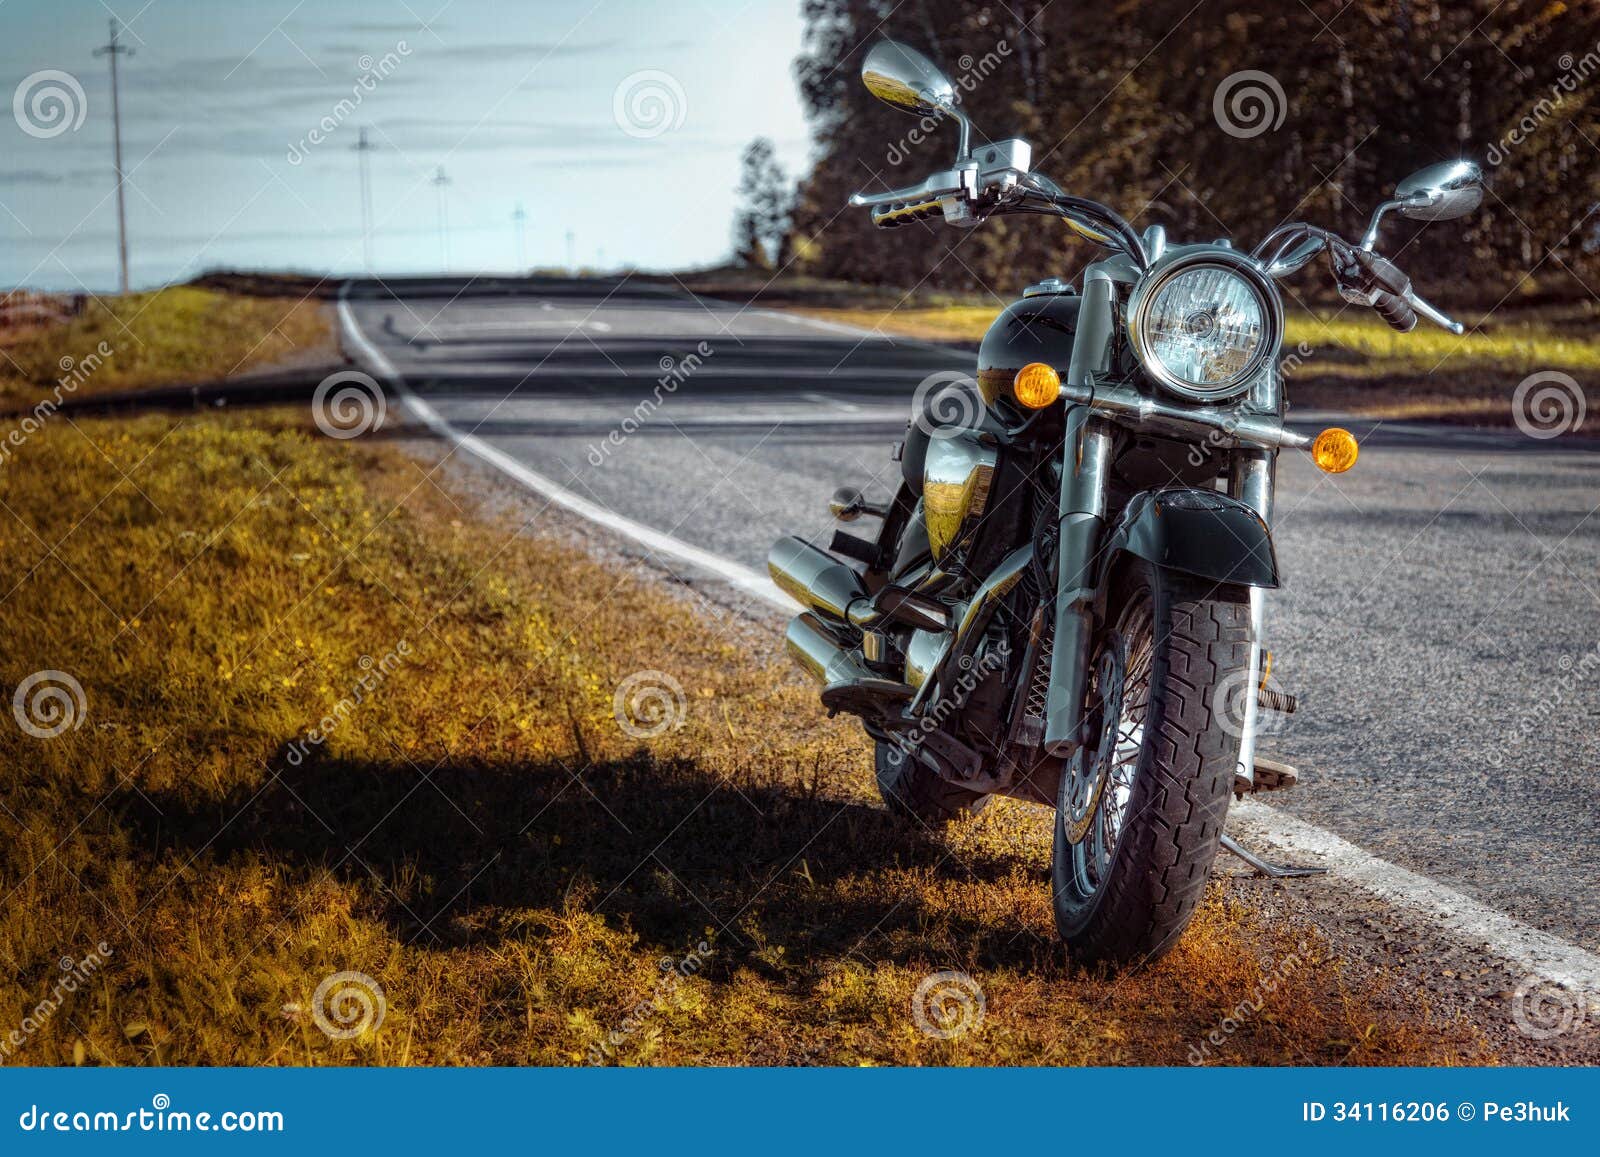 motorcycle chopper on the roadside